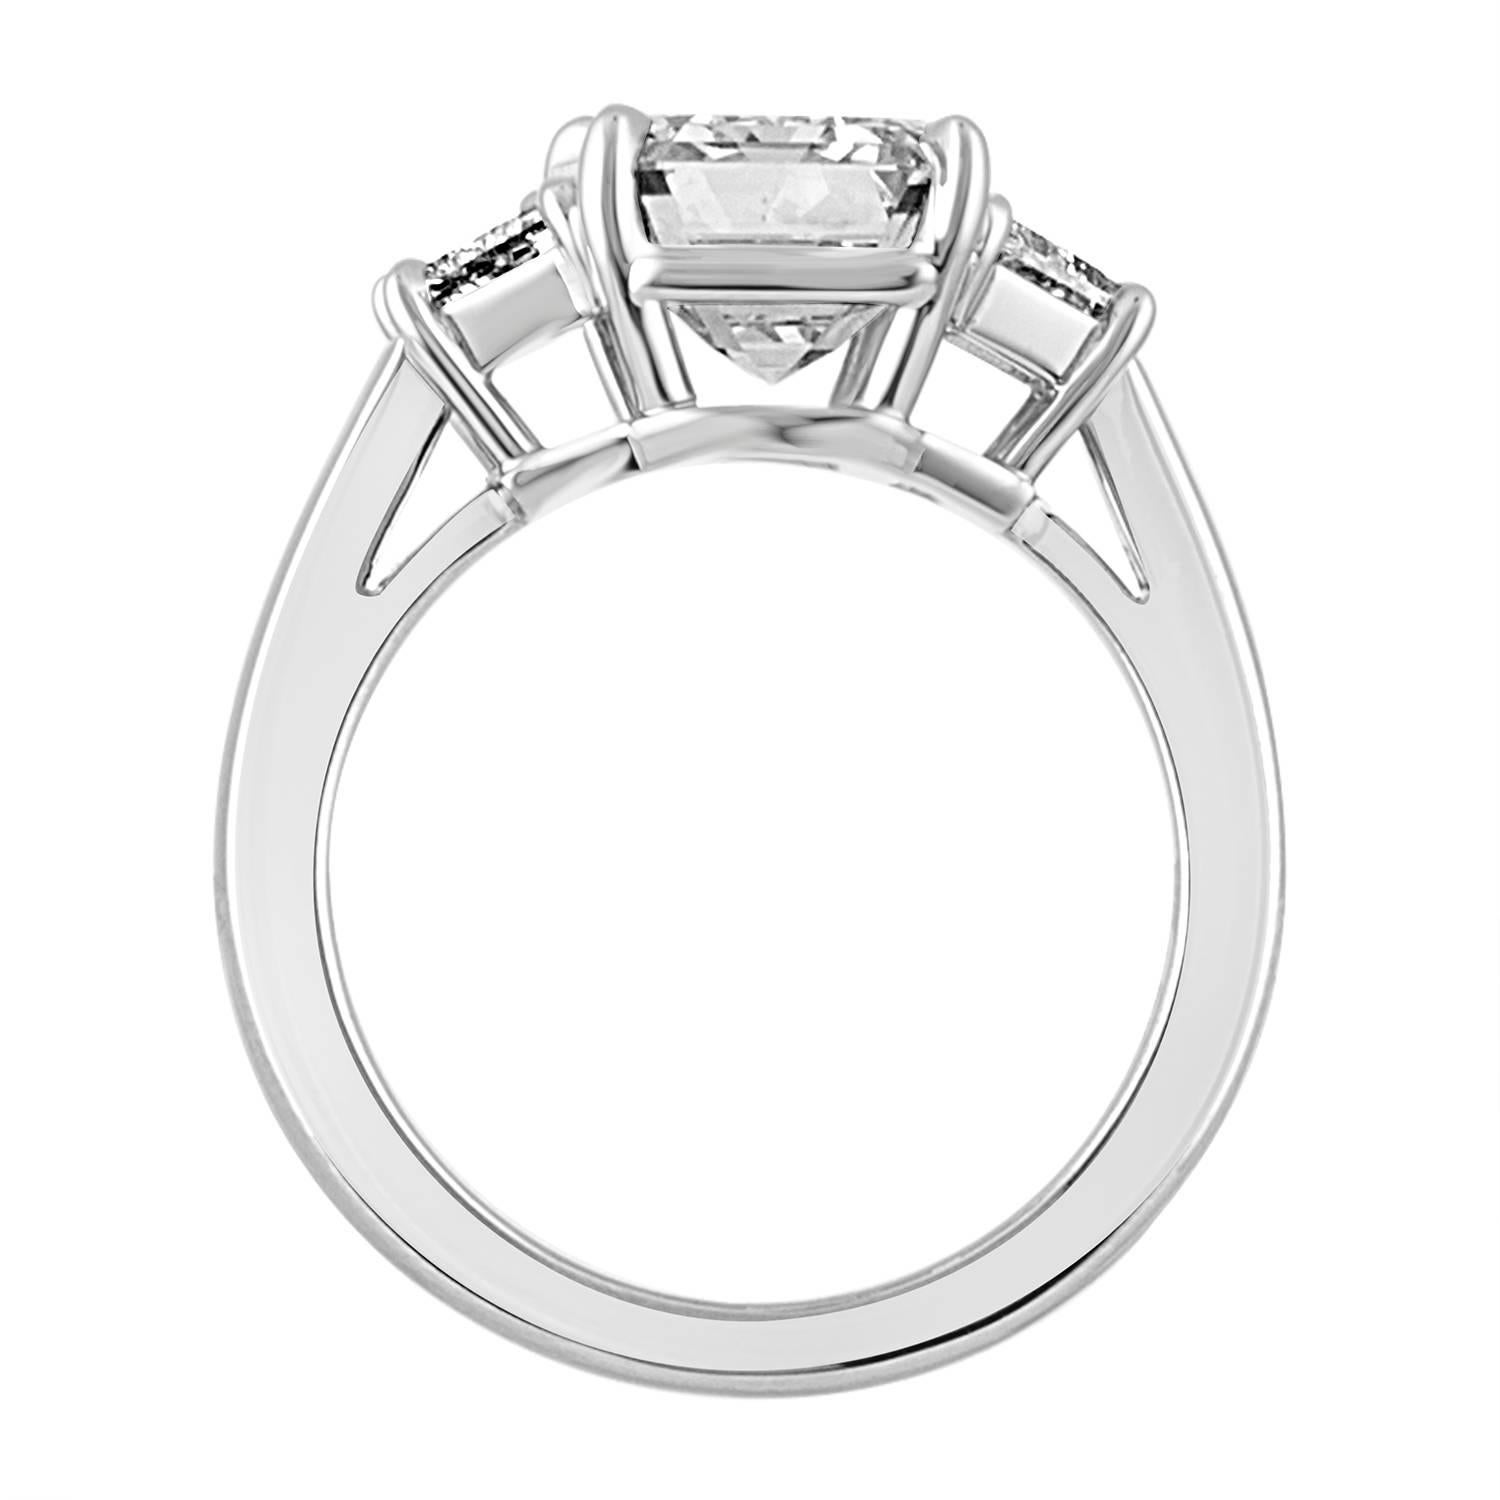 Contemporary 4.08 Carat Emerald Cut Diamond Set in Platinum Ring Mounting